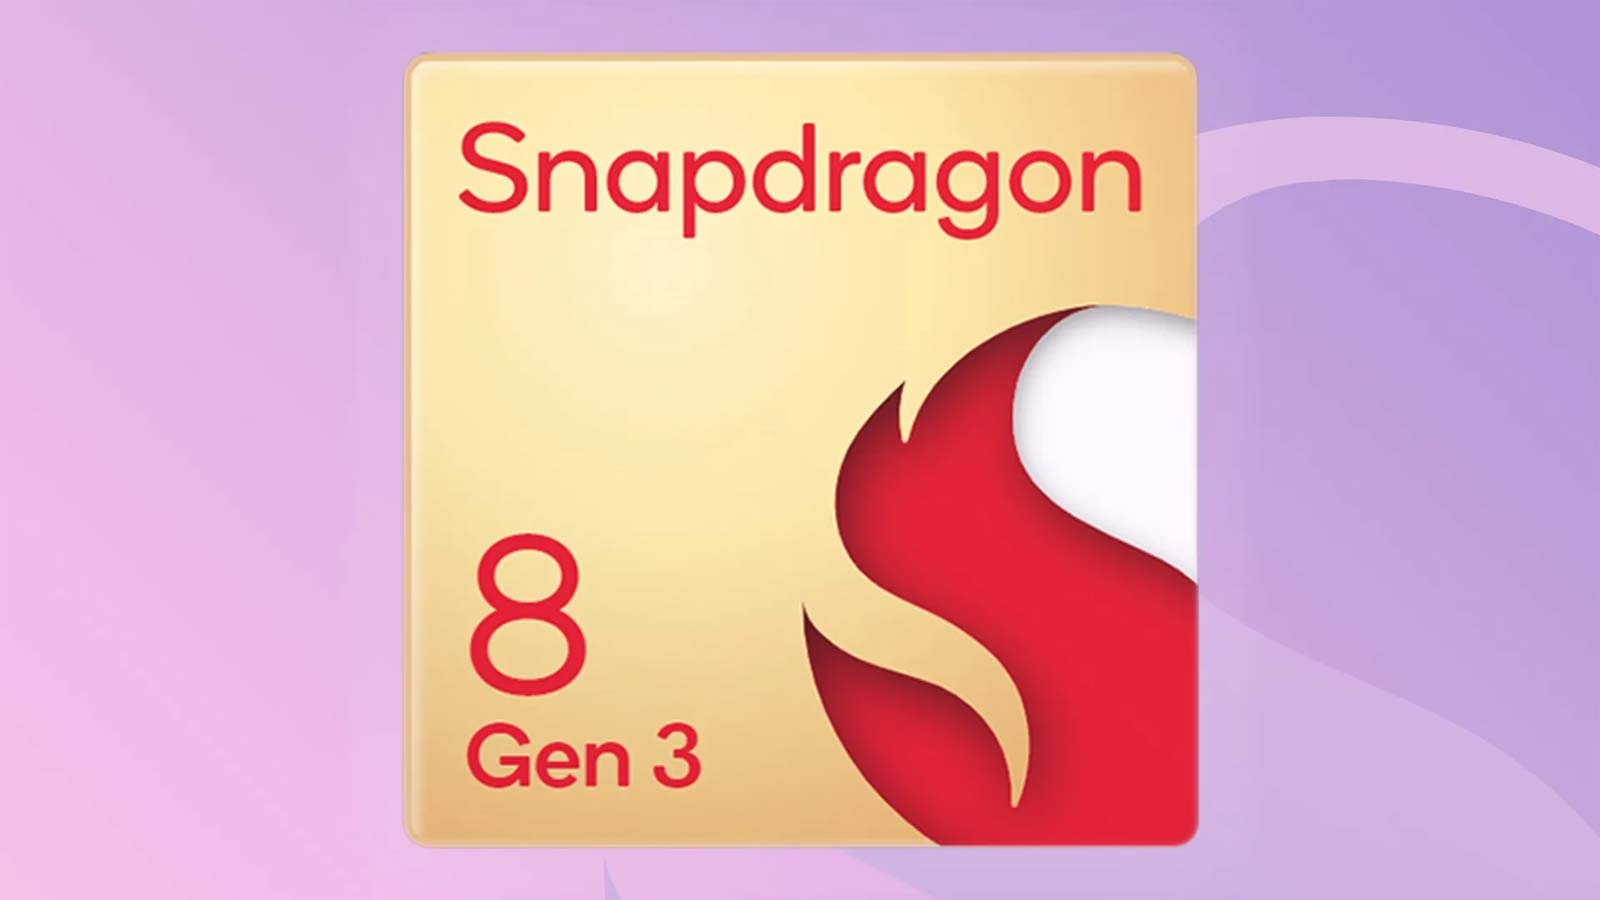 snapdragon-8-gen-3-1